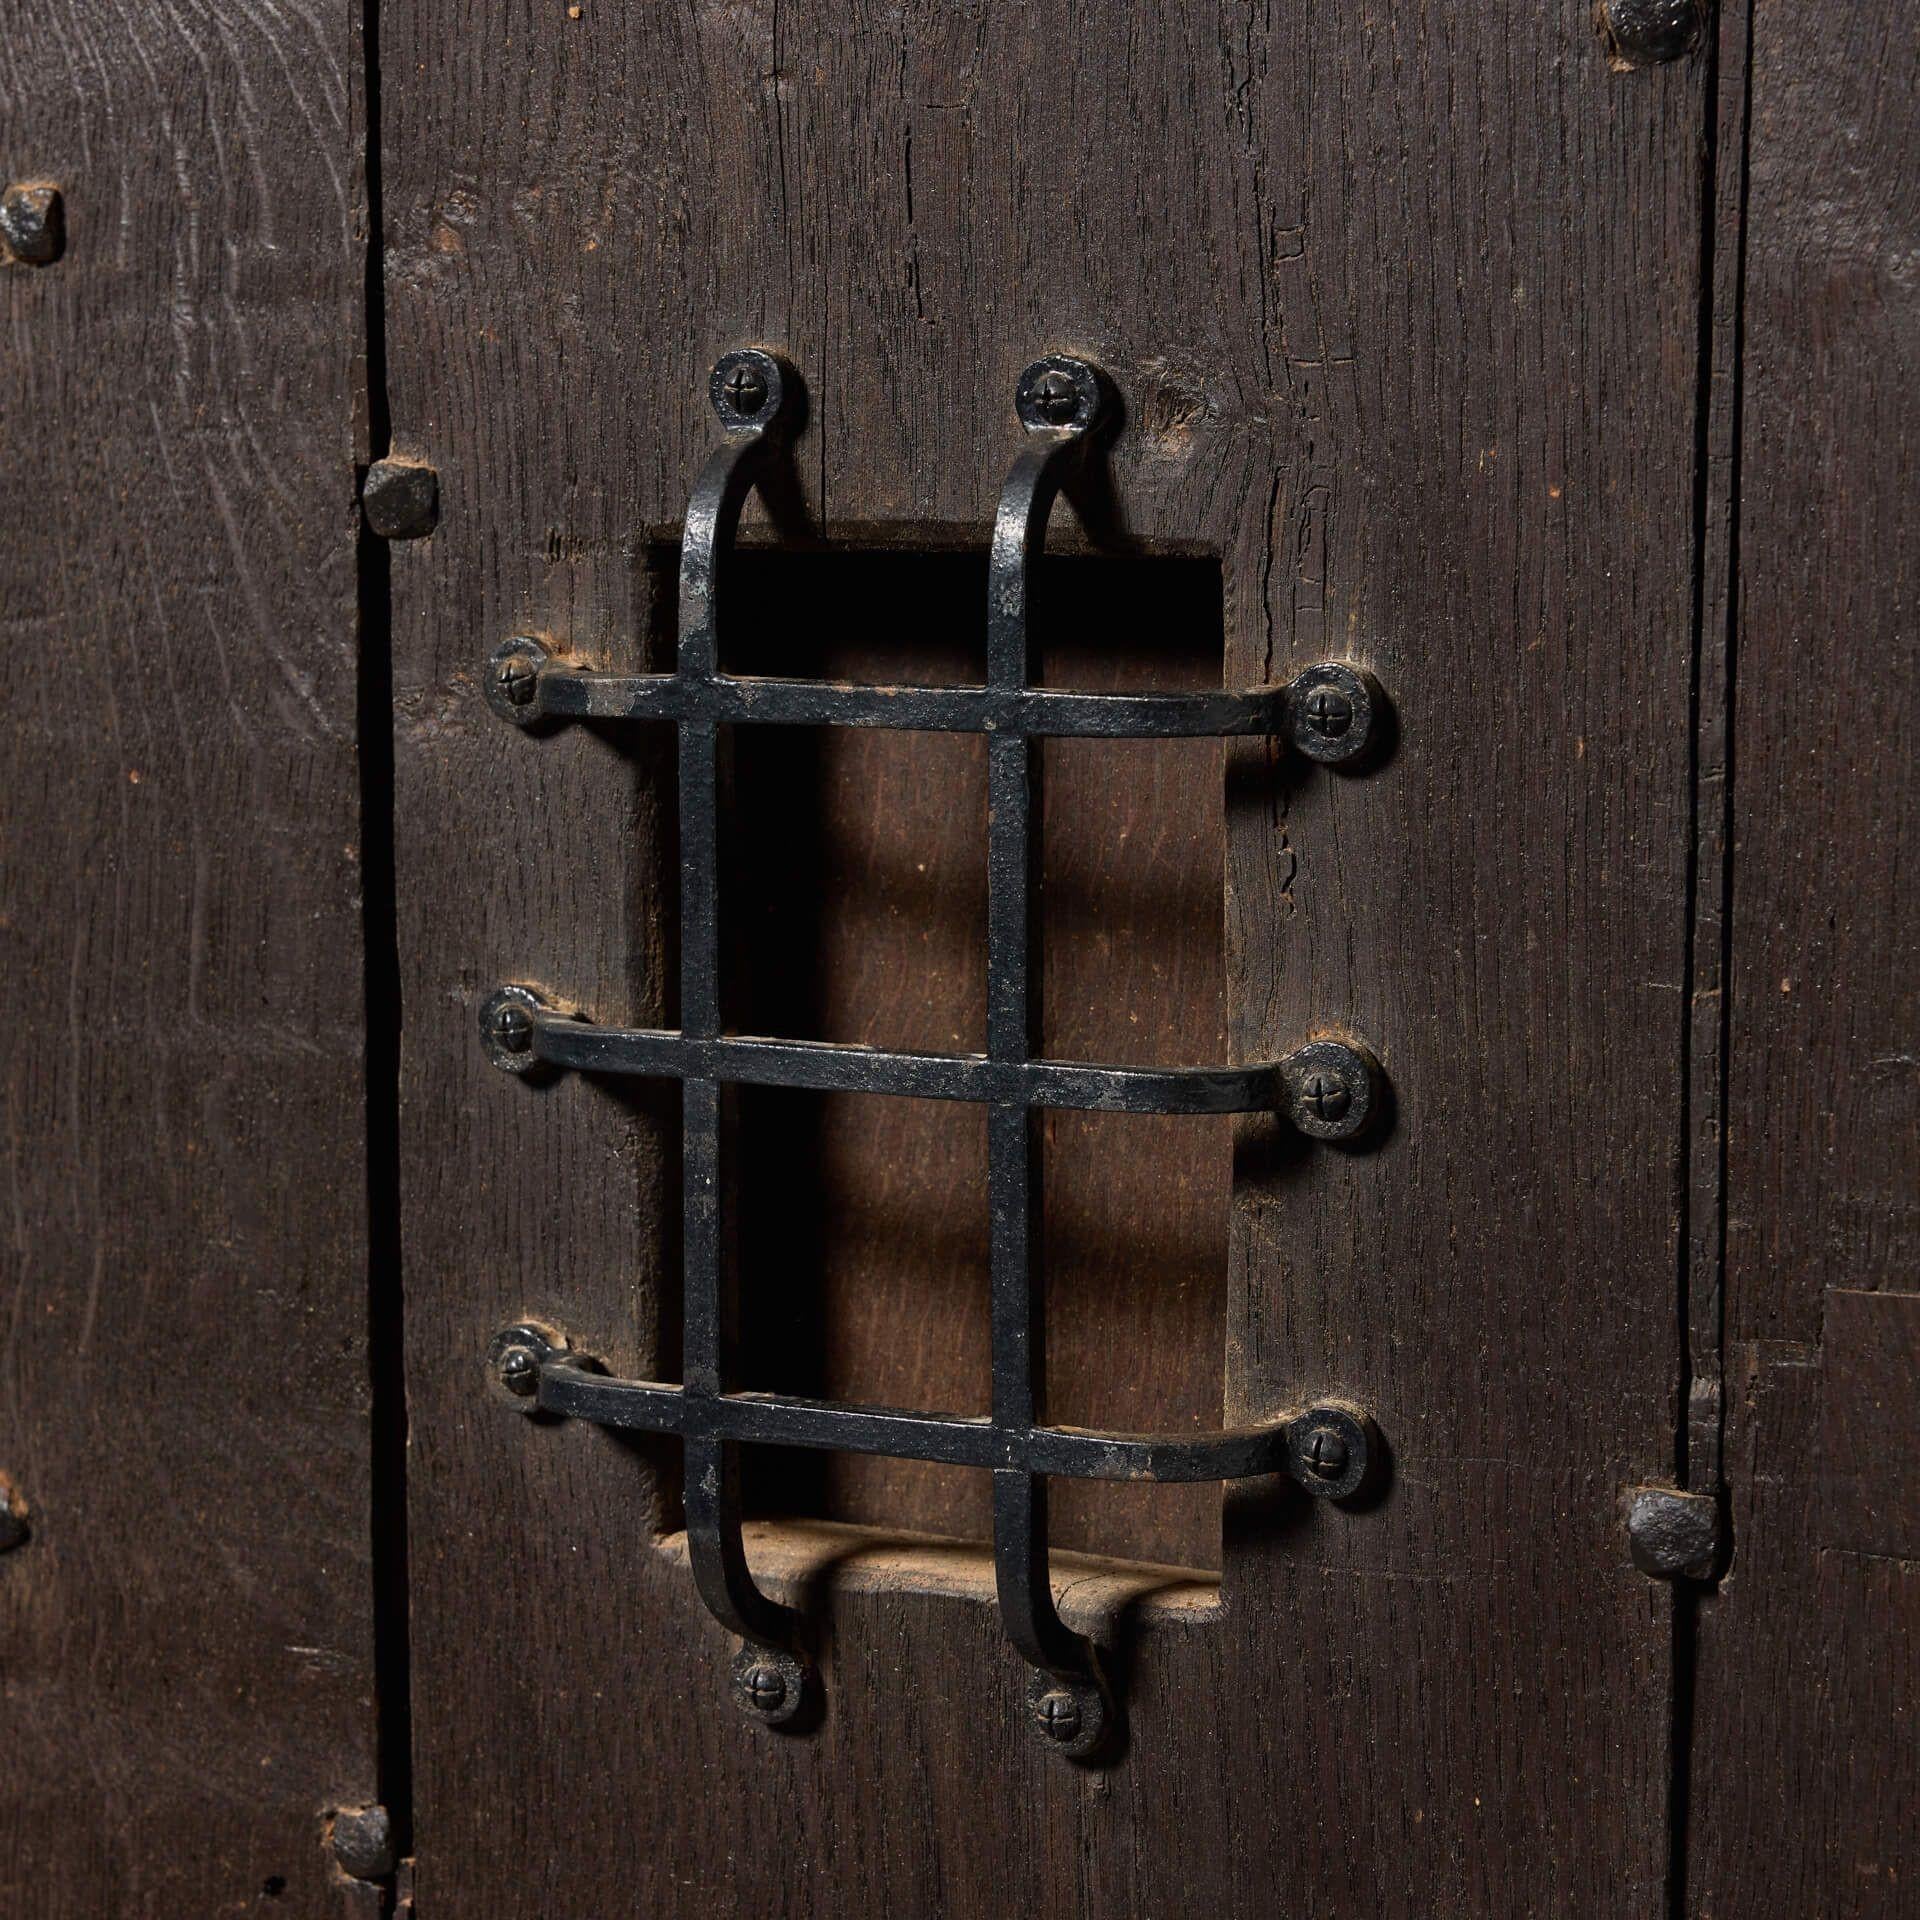 wood front door with peephole